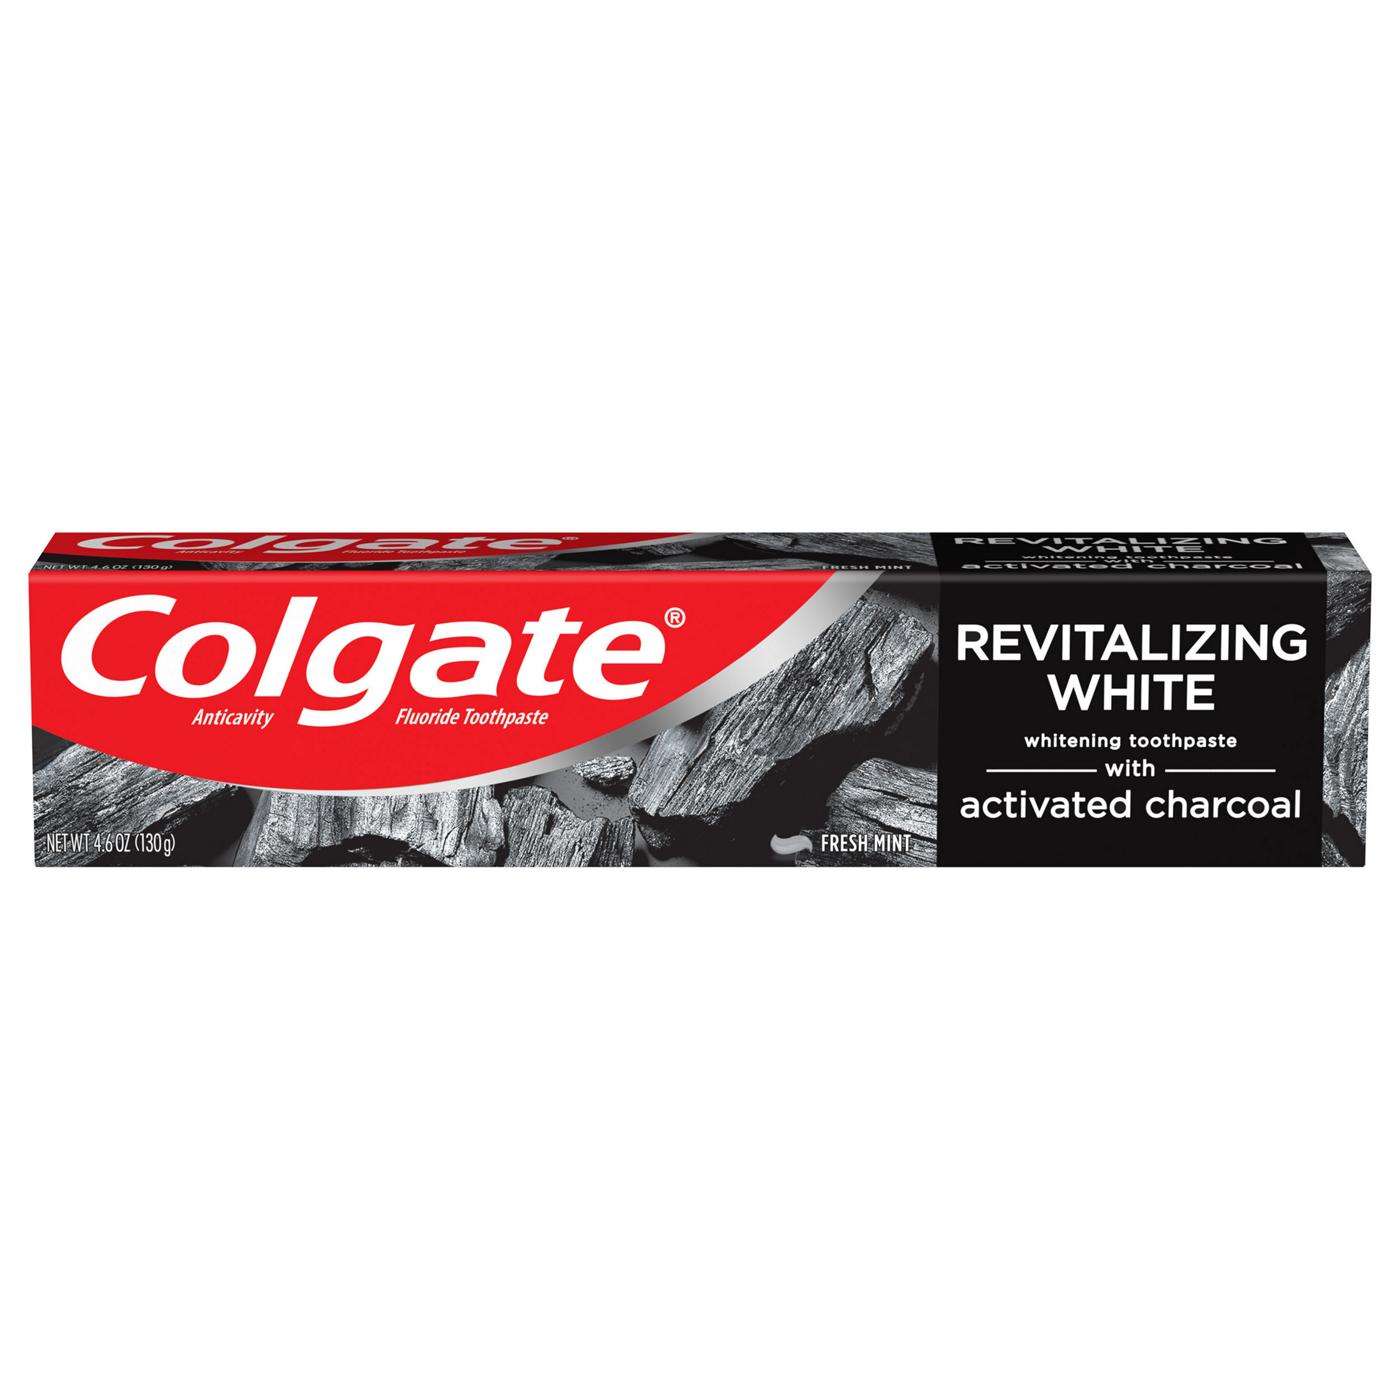 Colgate Revitalizing White Anticavity Toothpaste - Fresh Mint; image 1 of 2